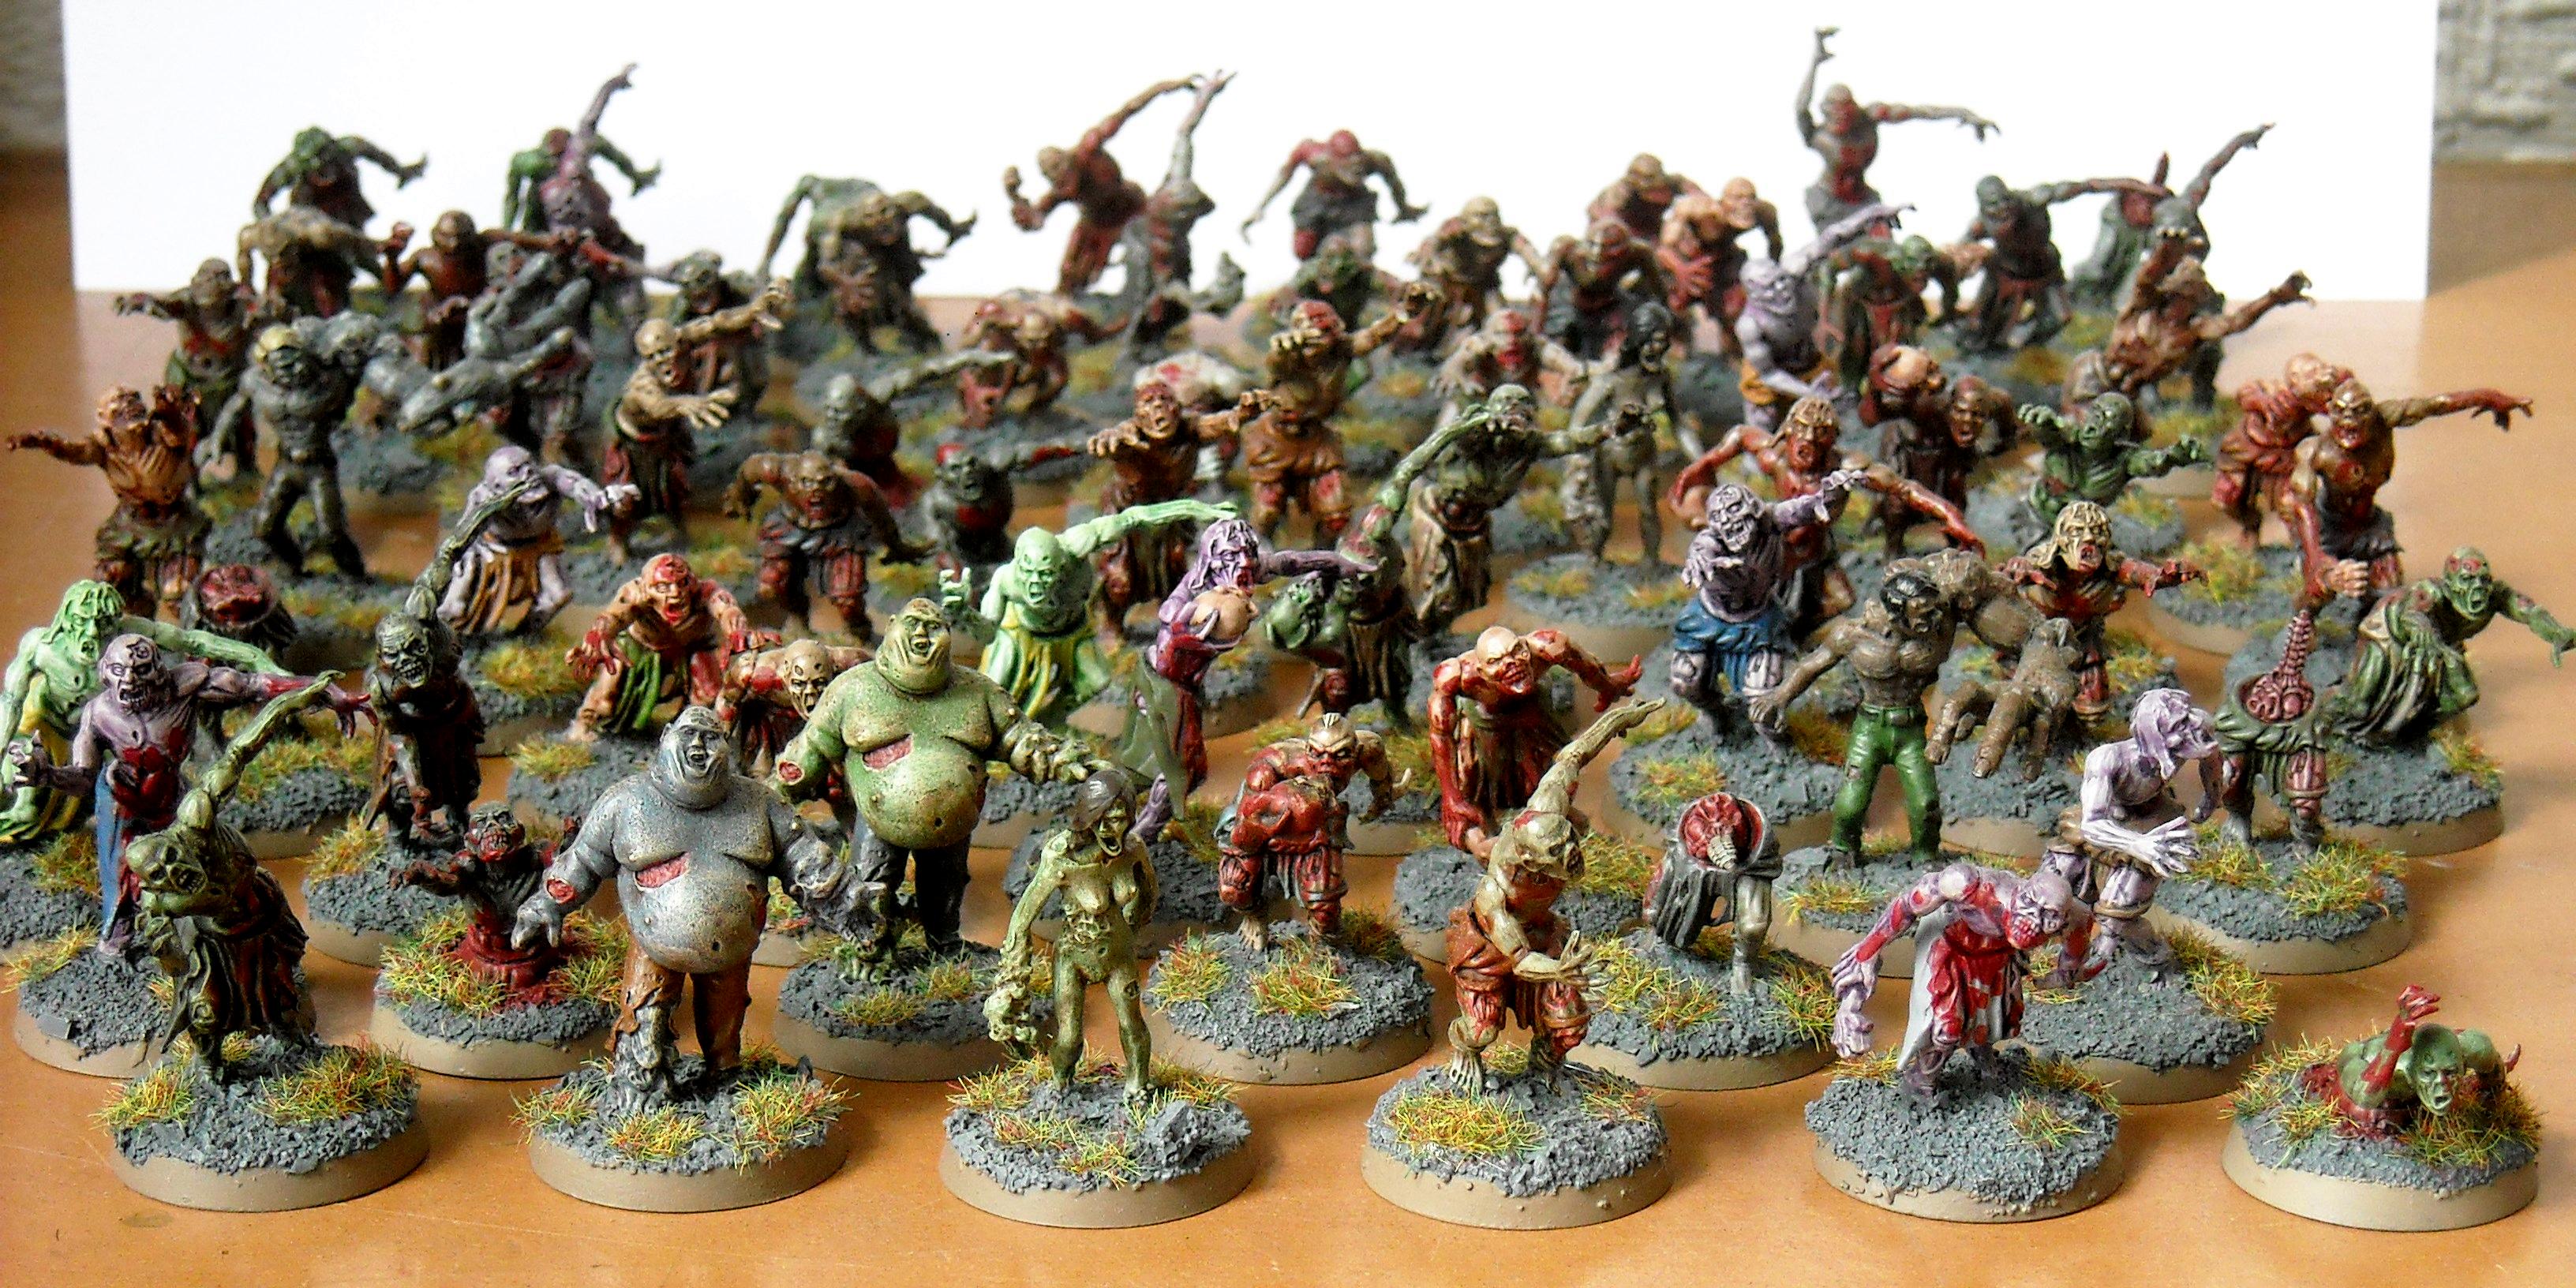 The zombie horde